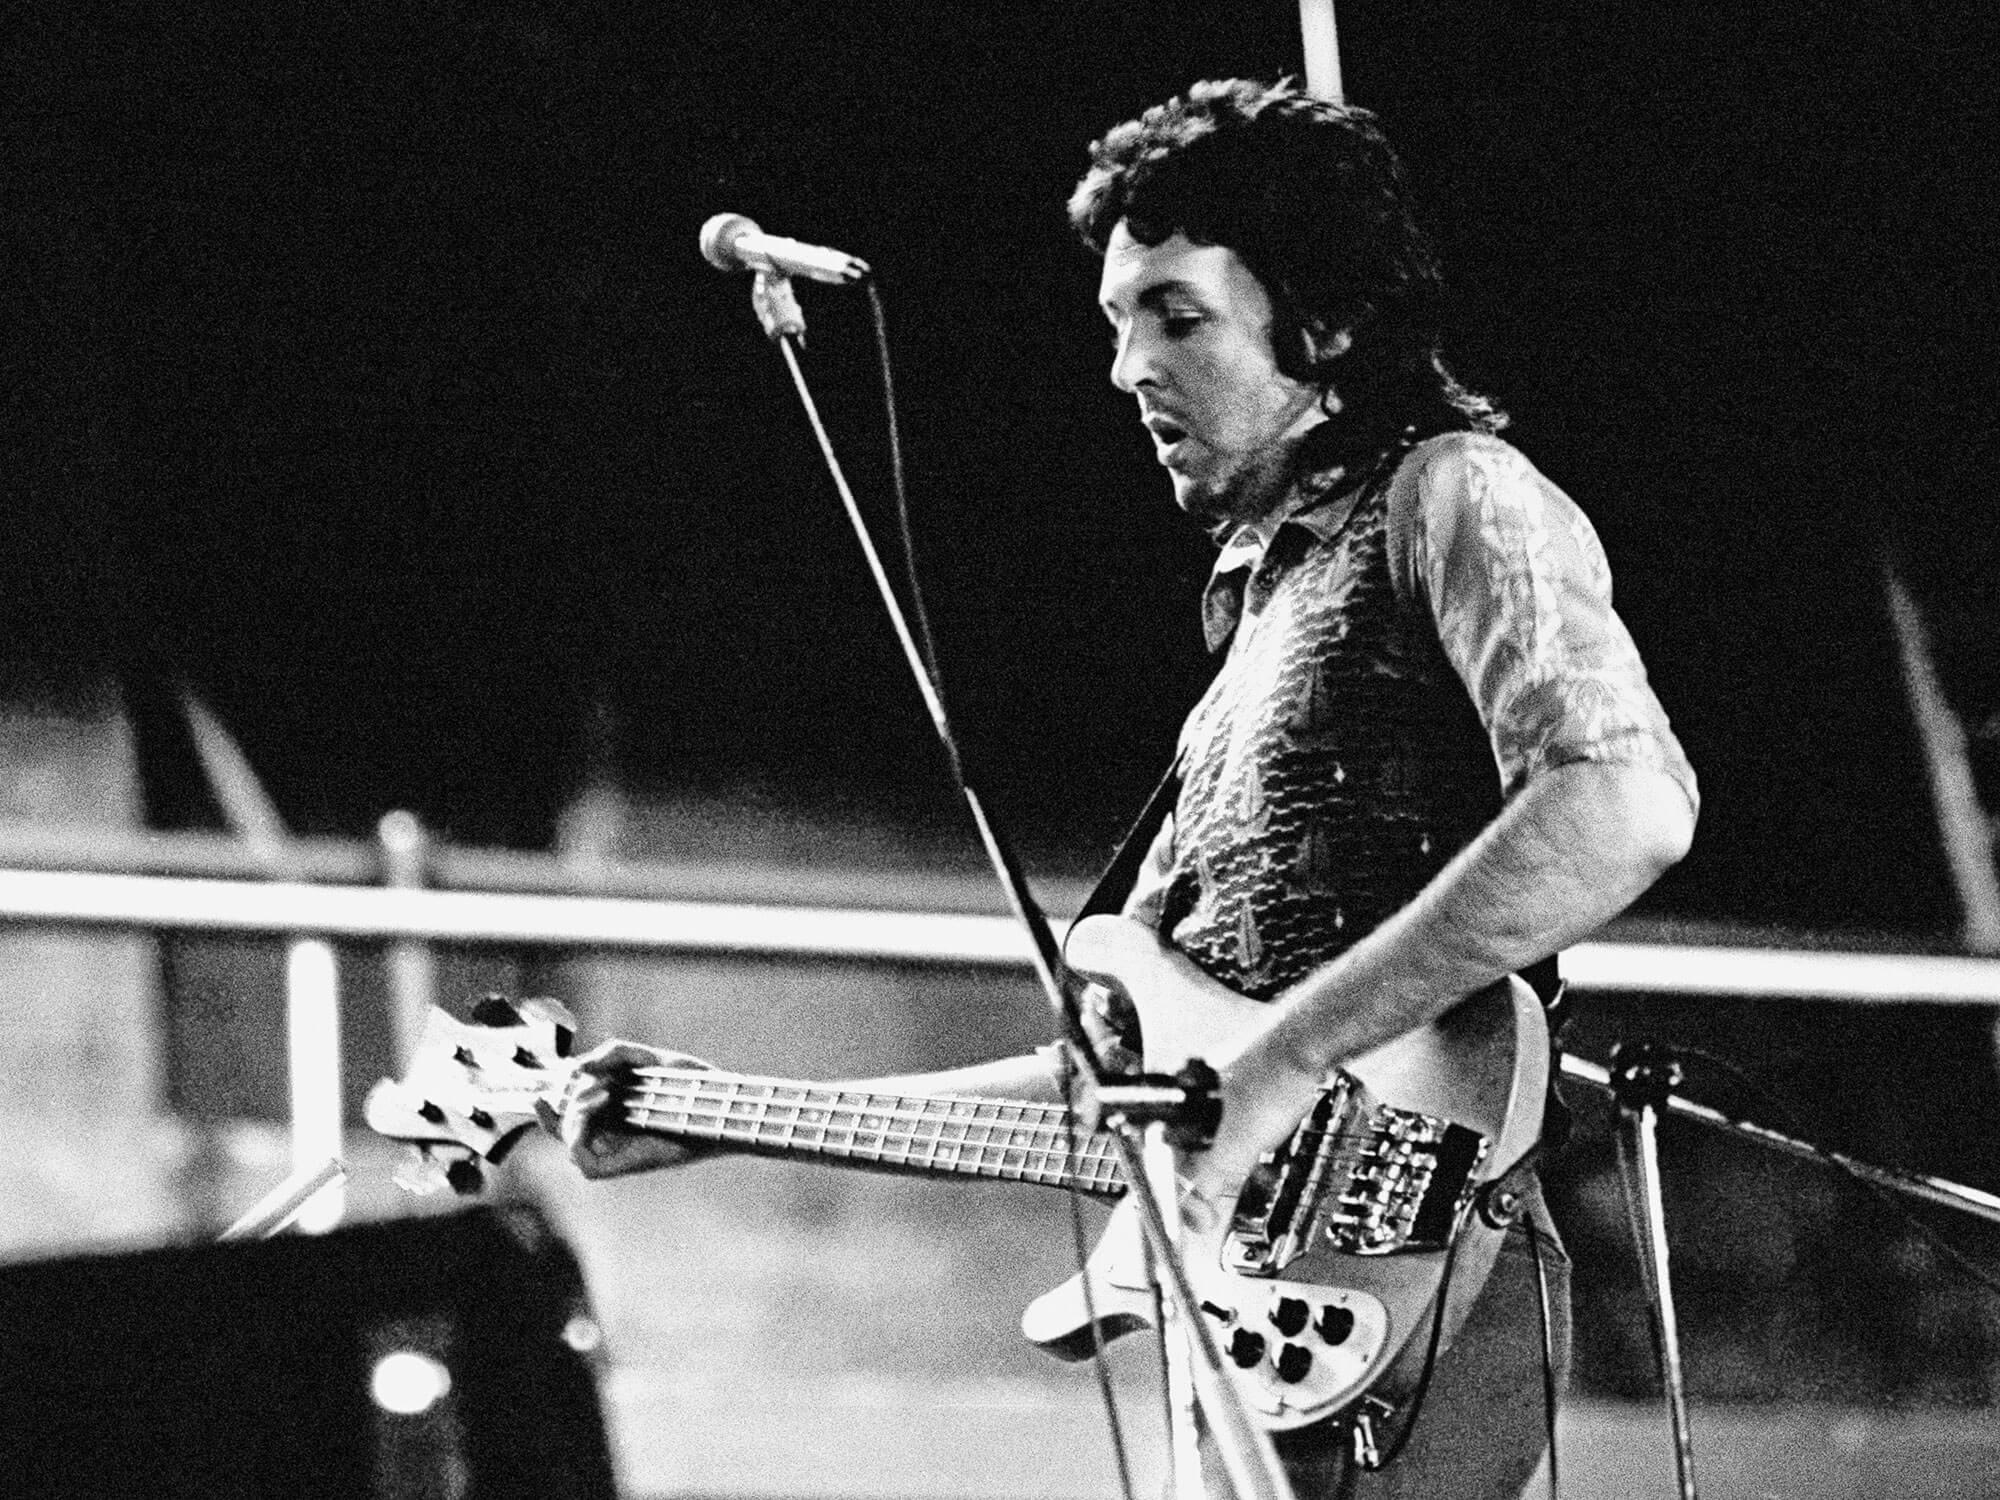 Paul McCartney rehearsing with Wings in 1973